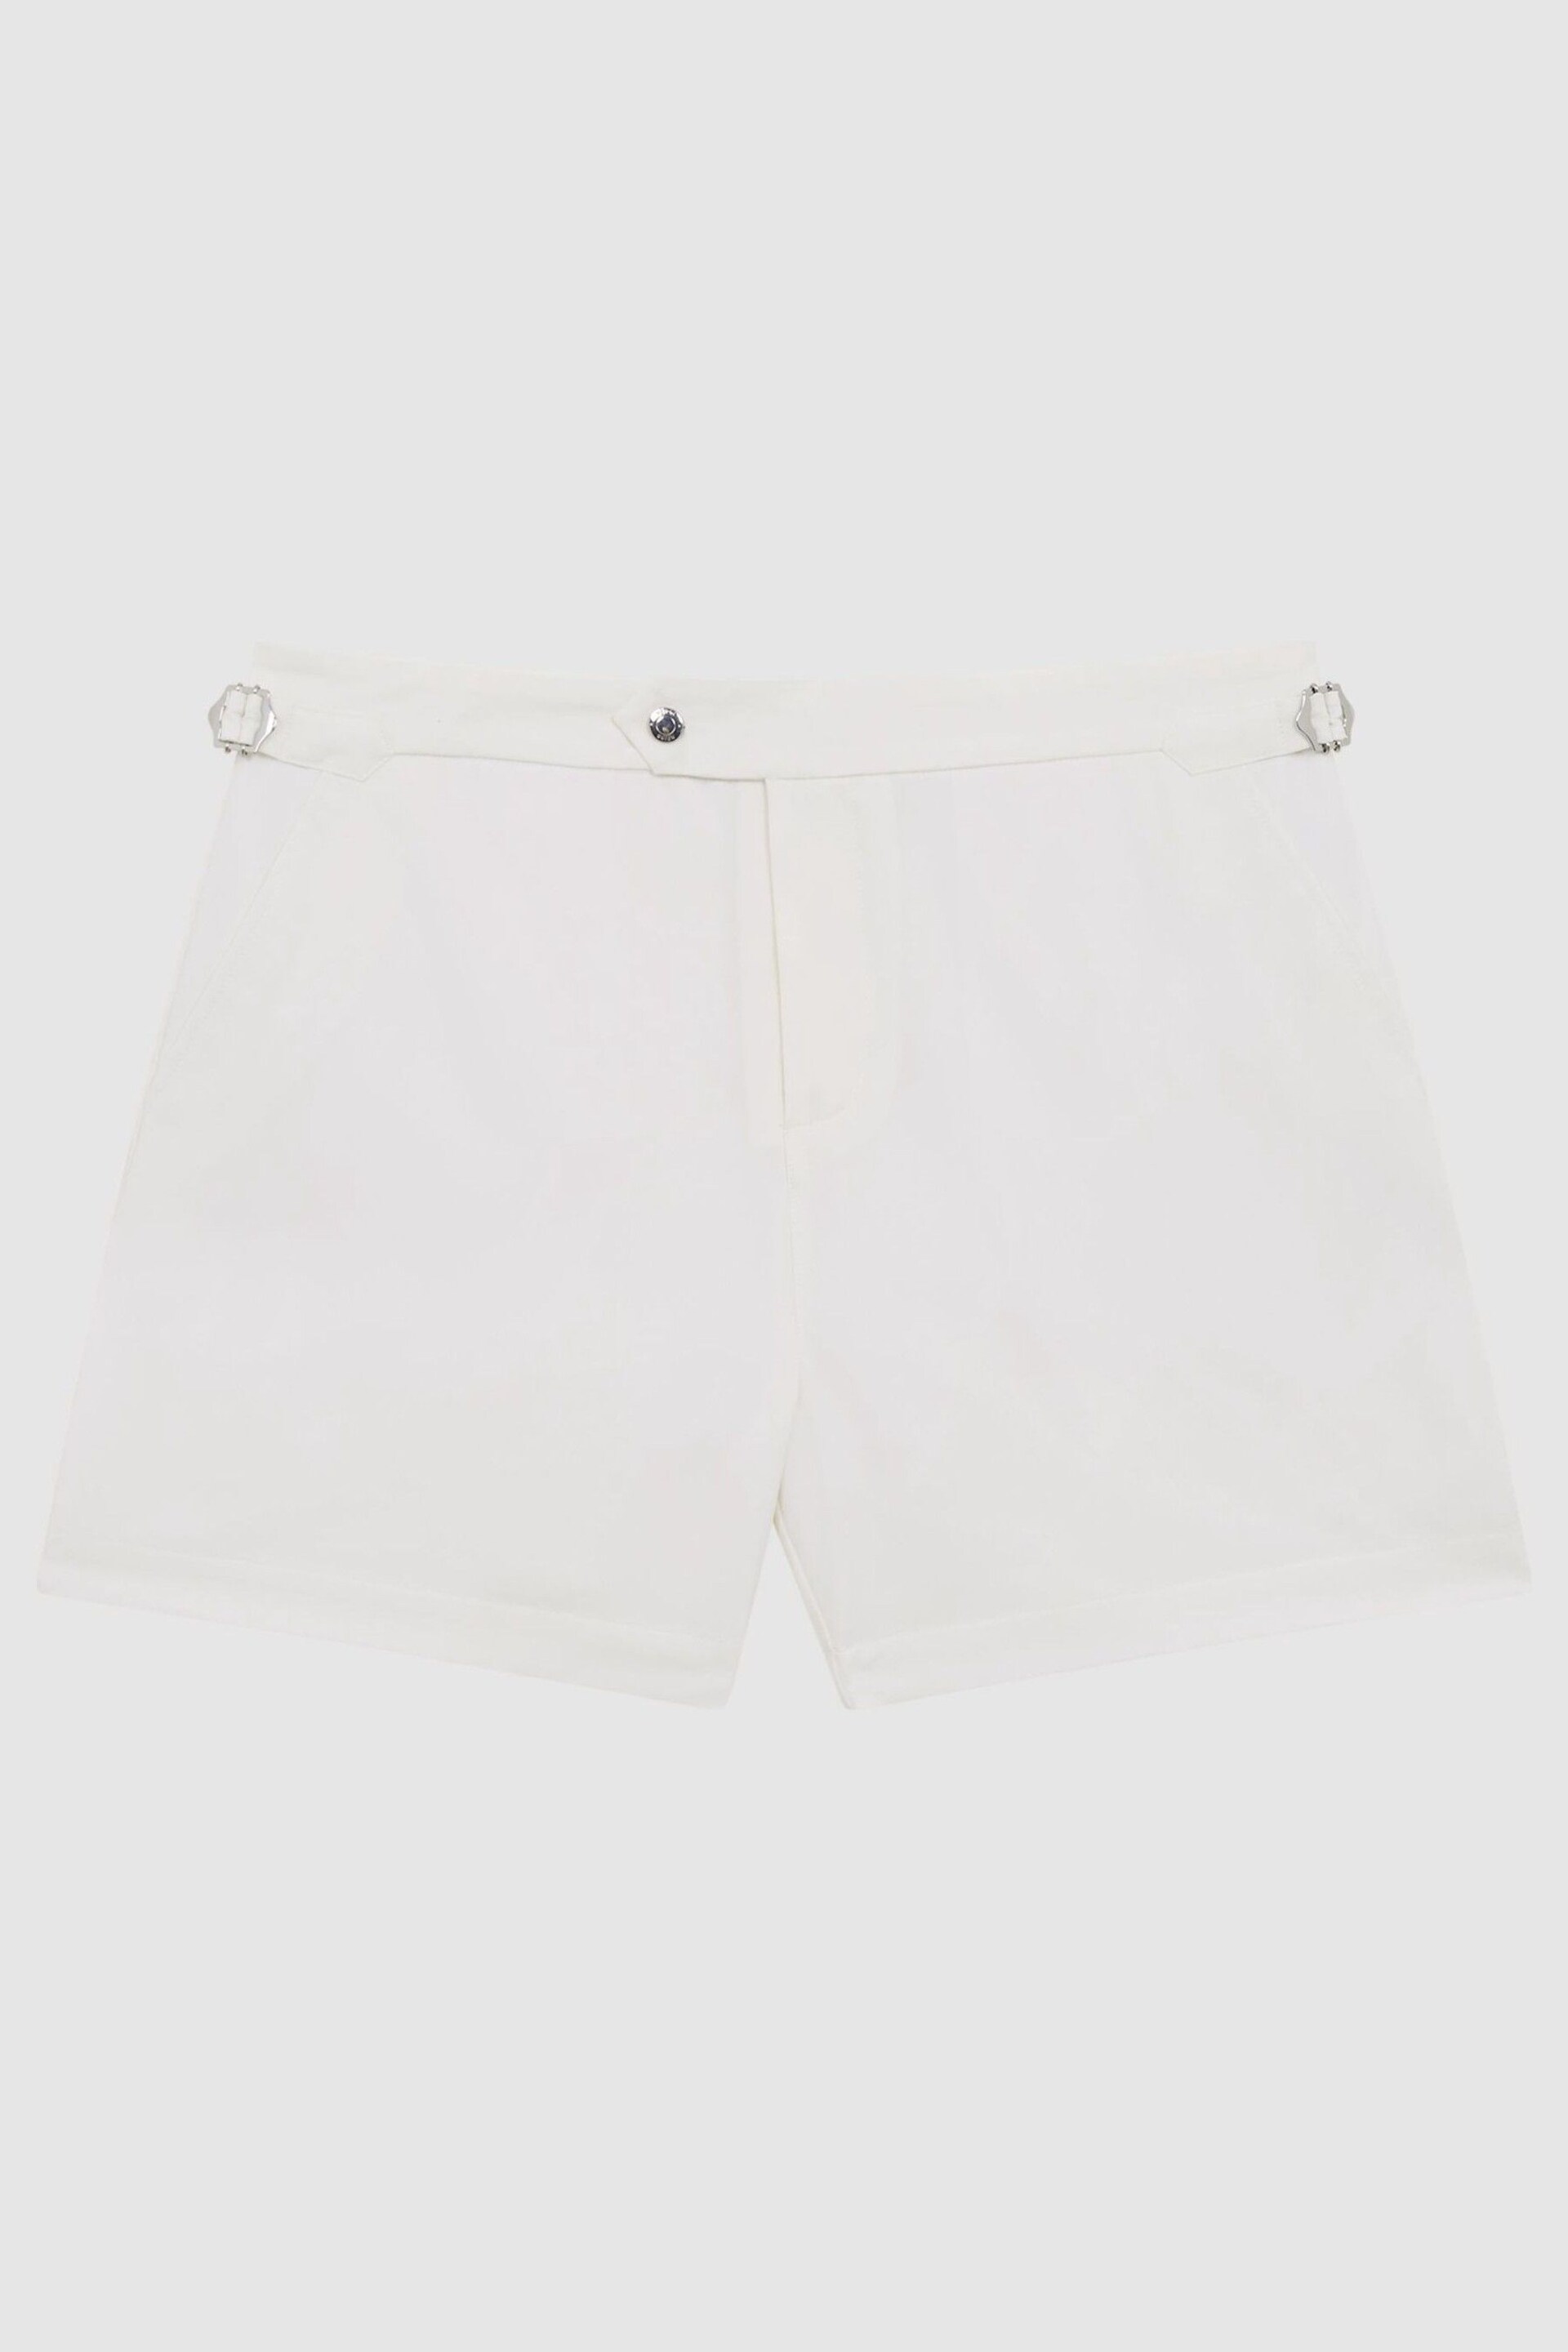 Reiss White Sun Side Adjuster Swim Shorts - Image 2 of 6